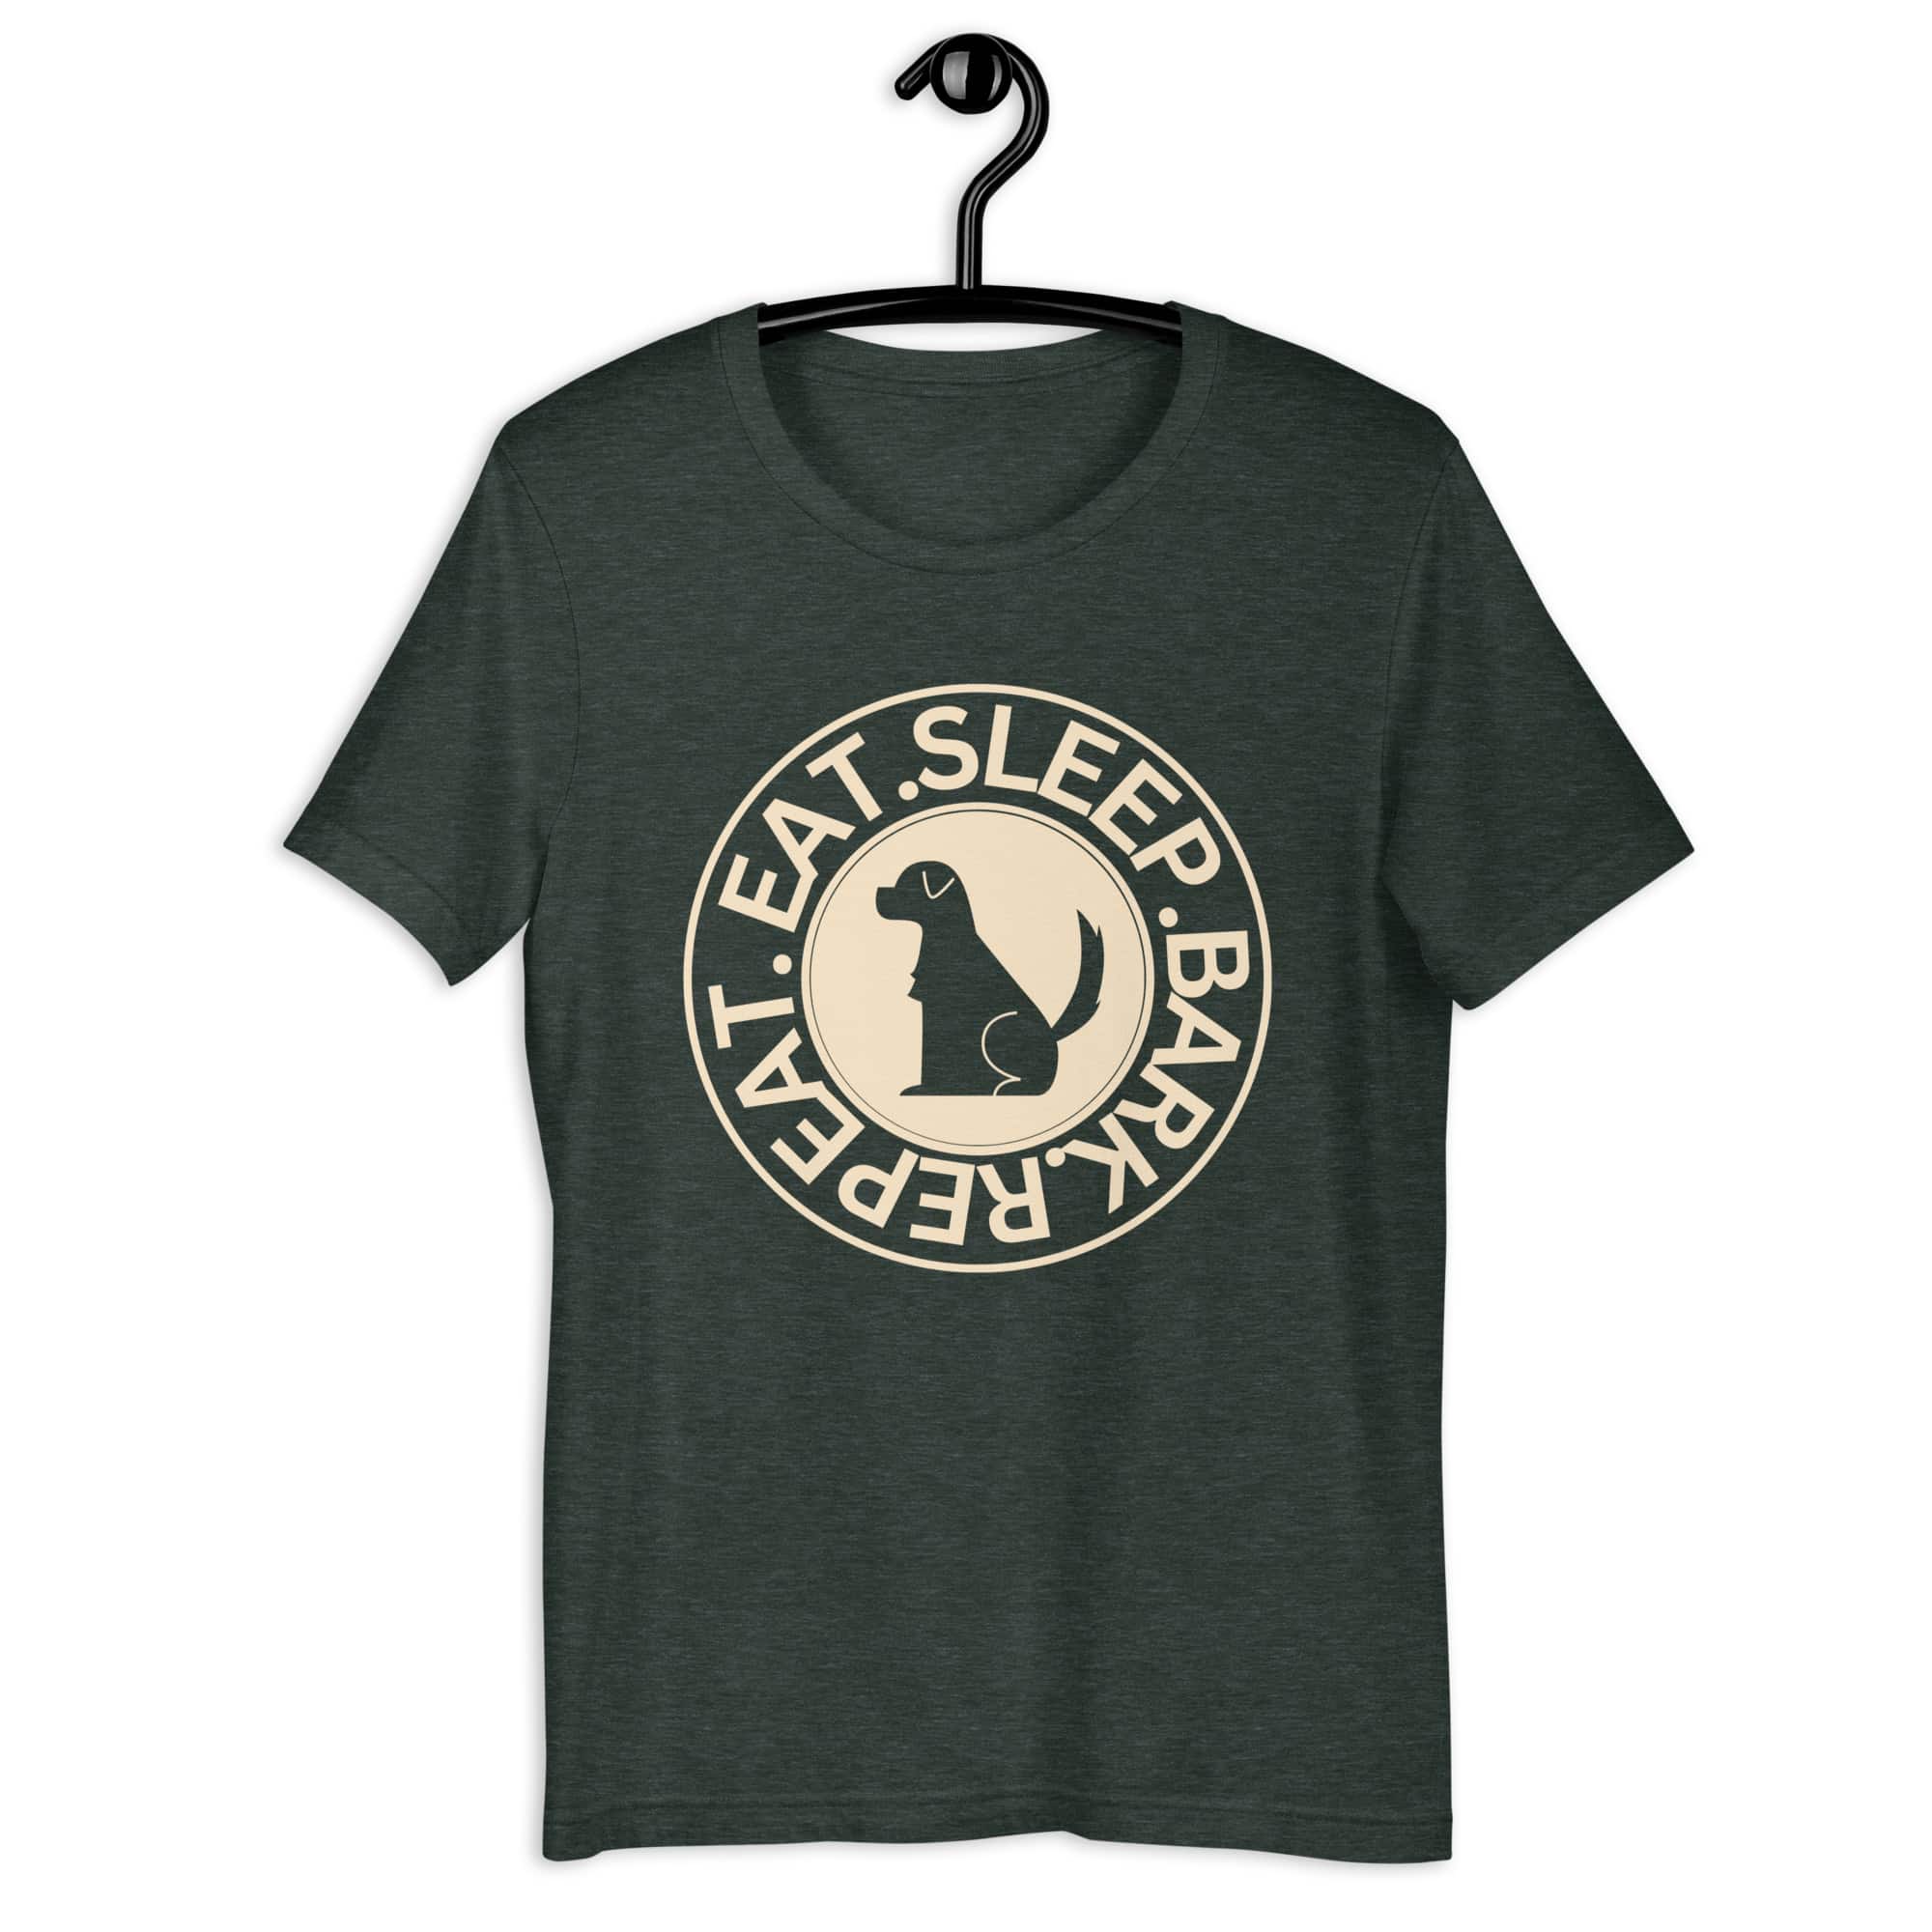 Eat Sleep Bark Repeat Ansylvanian Hound Unisex T-Shirt. Heather Forest